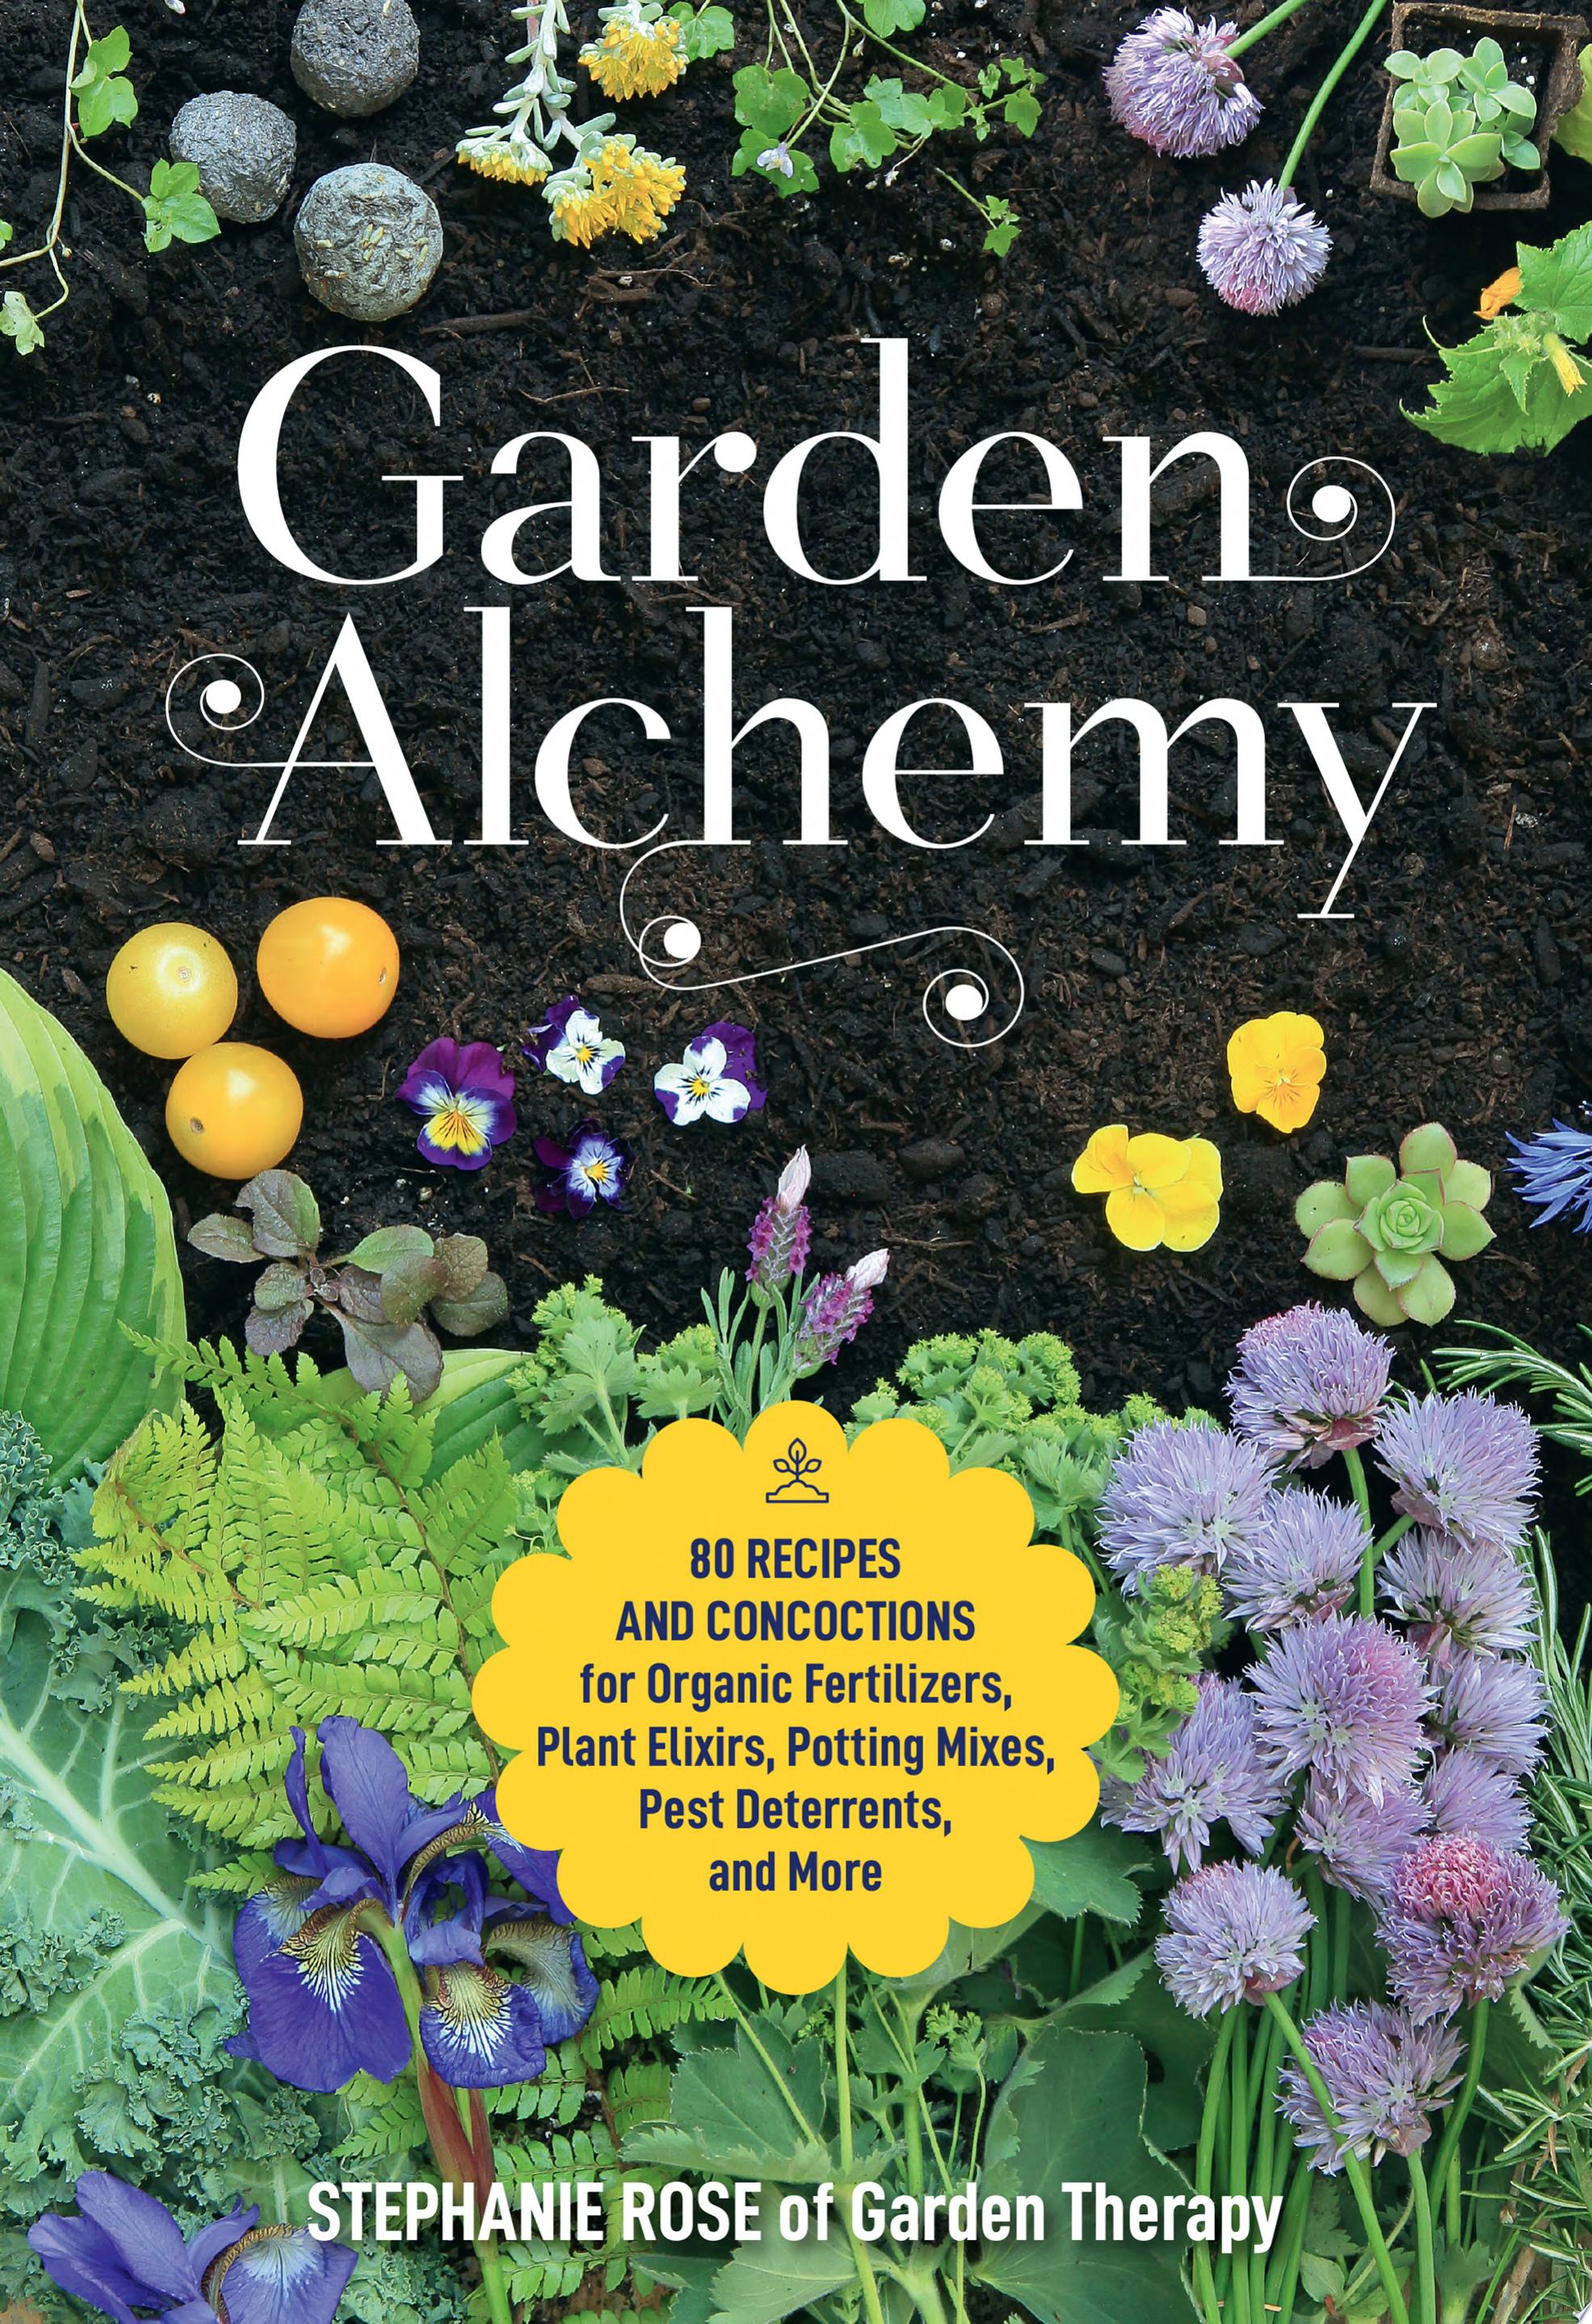 Image for "Garden Alchemy"